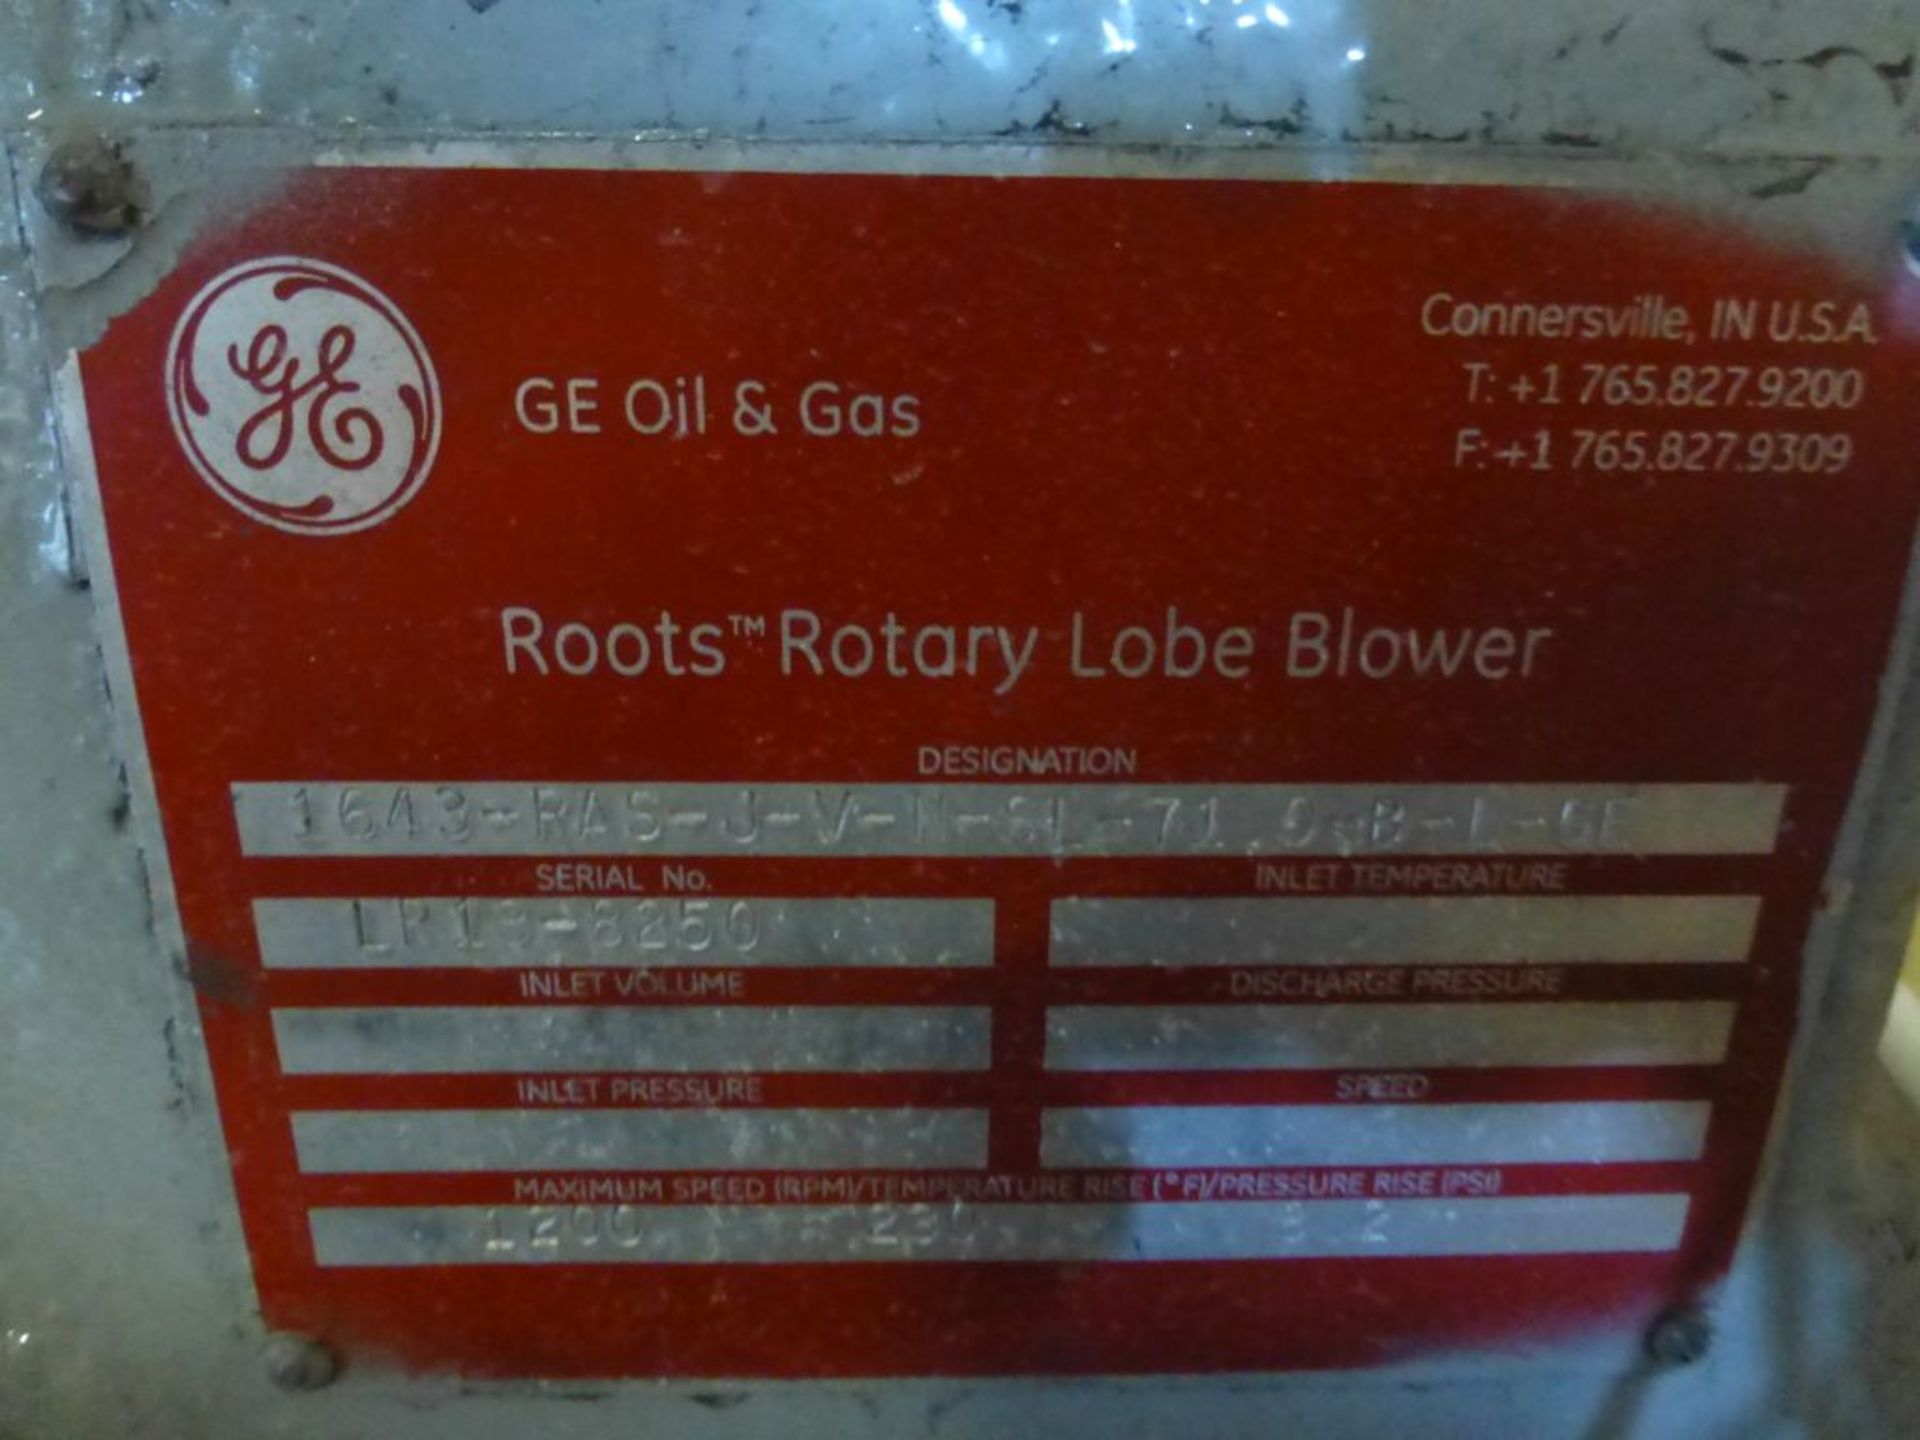 GE Roots Rotary Lobe Blower | Model No. 1643-RAS-J-V-N-SL-71; 1200 RPM; Temperature Rise: 320 Degree - Image 8 of 8